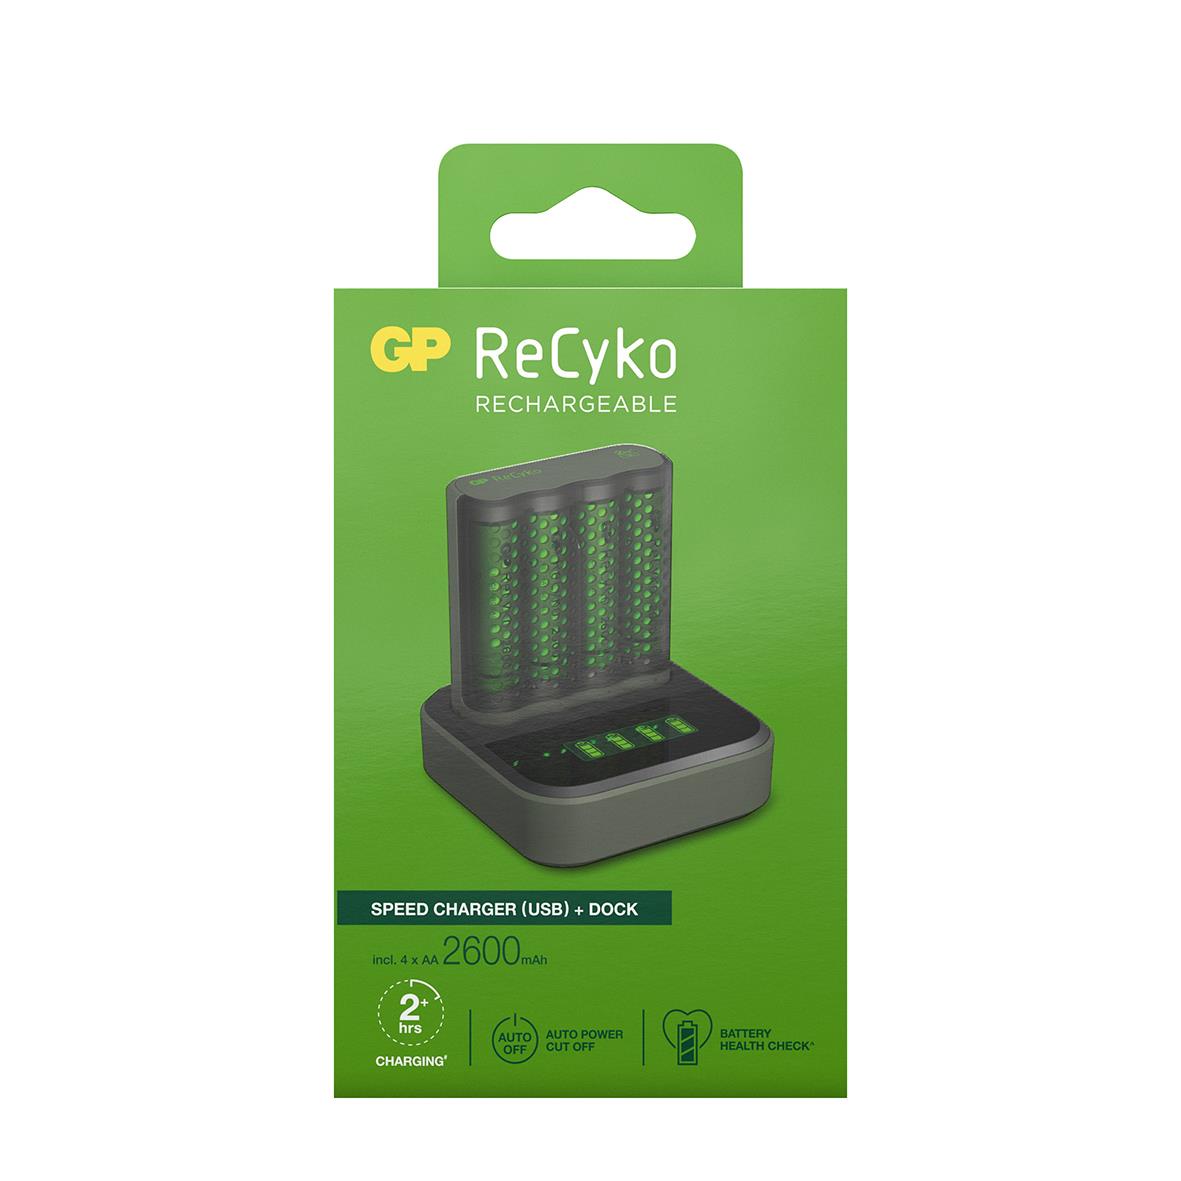 Batteriladdare GP ReCyko med laddningsdocka inkl 4 AA batterier 39420034_4